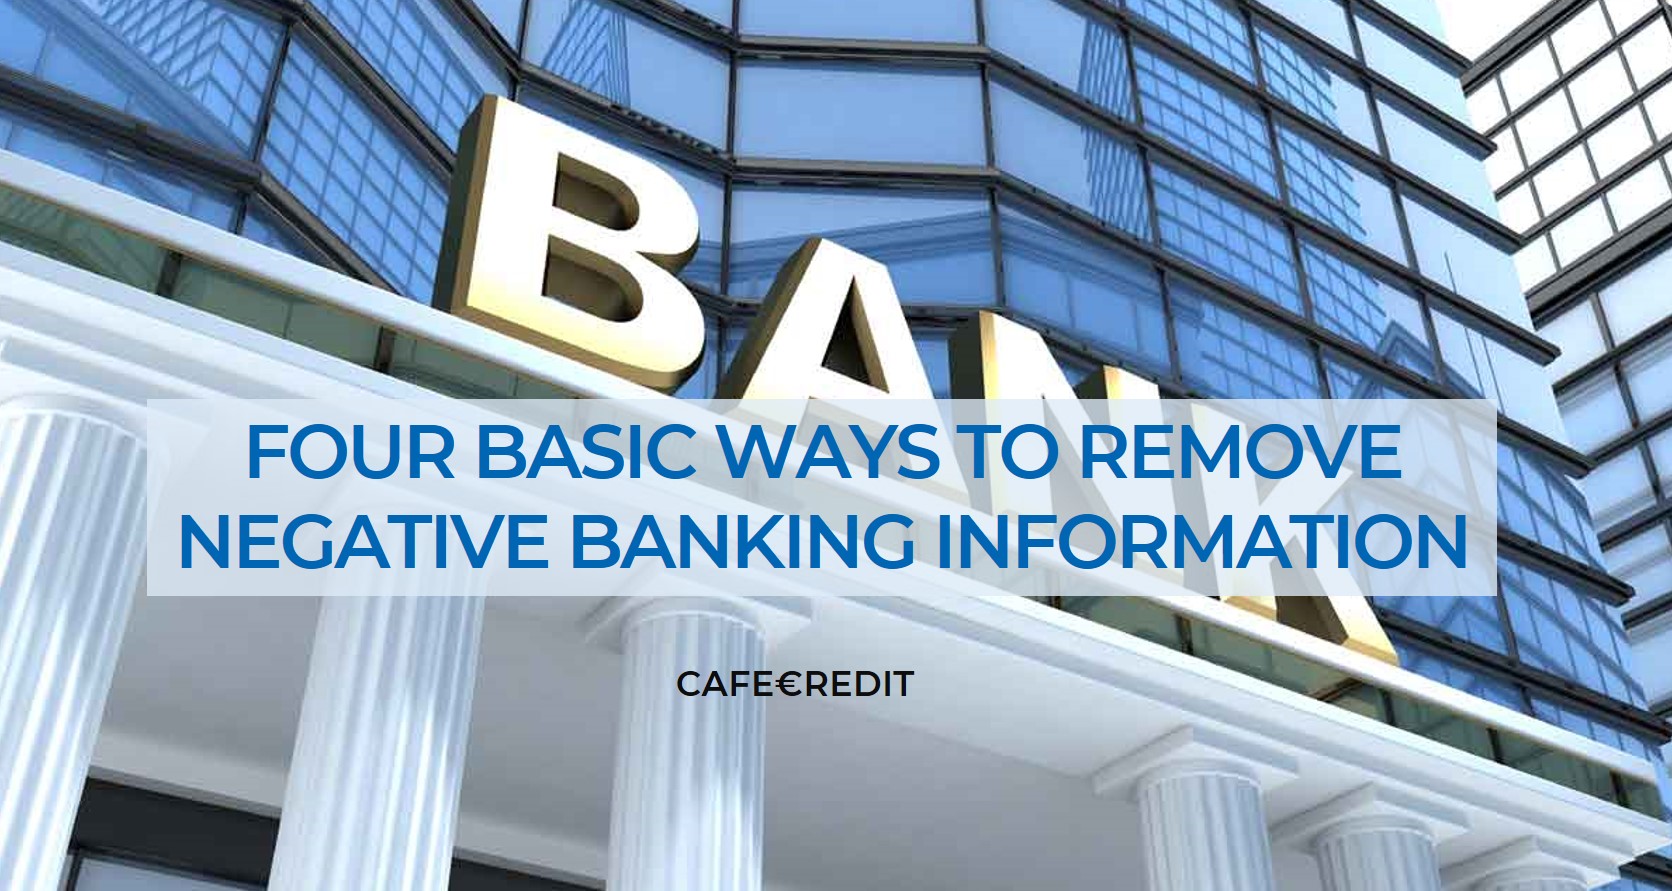 FOUR BASIC WAYS TO REMOVE NEGATIVE BANKING INFORMATION